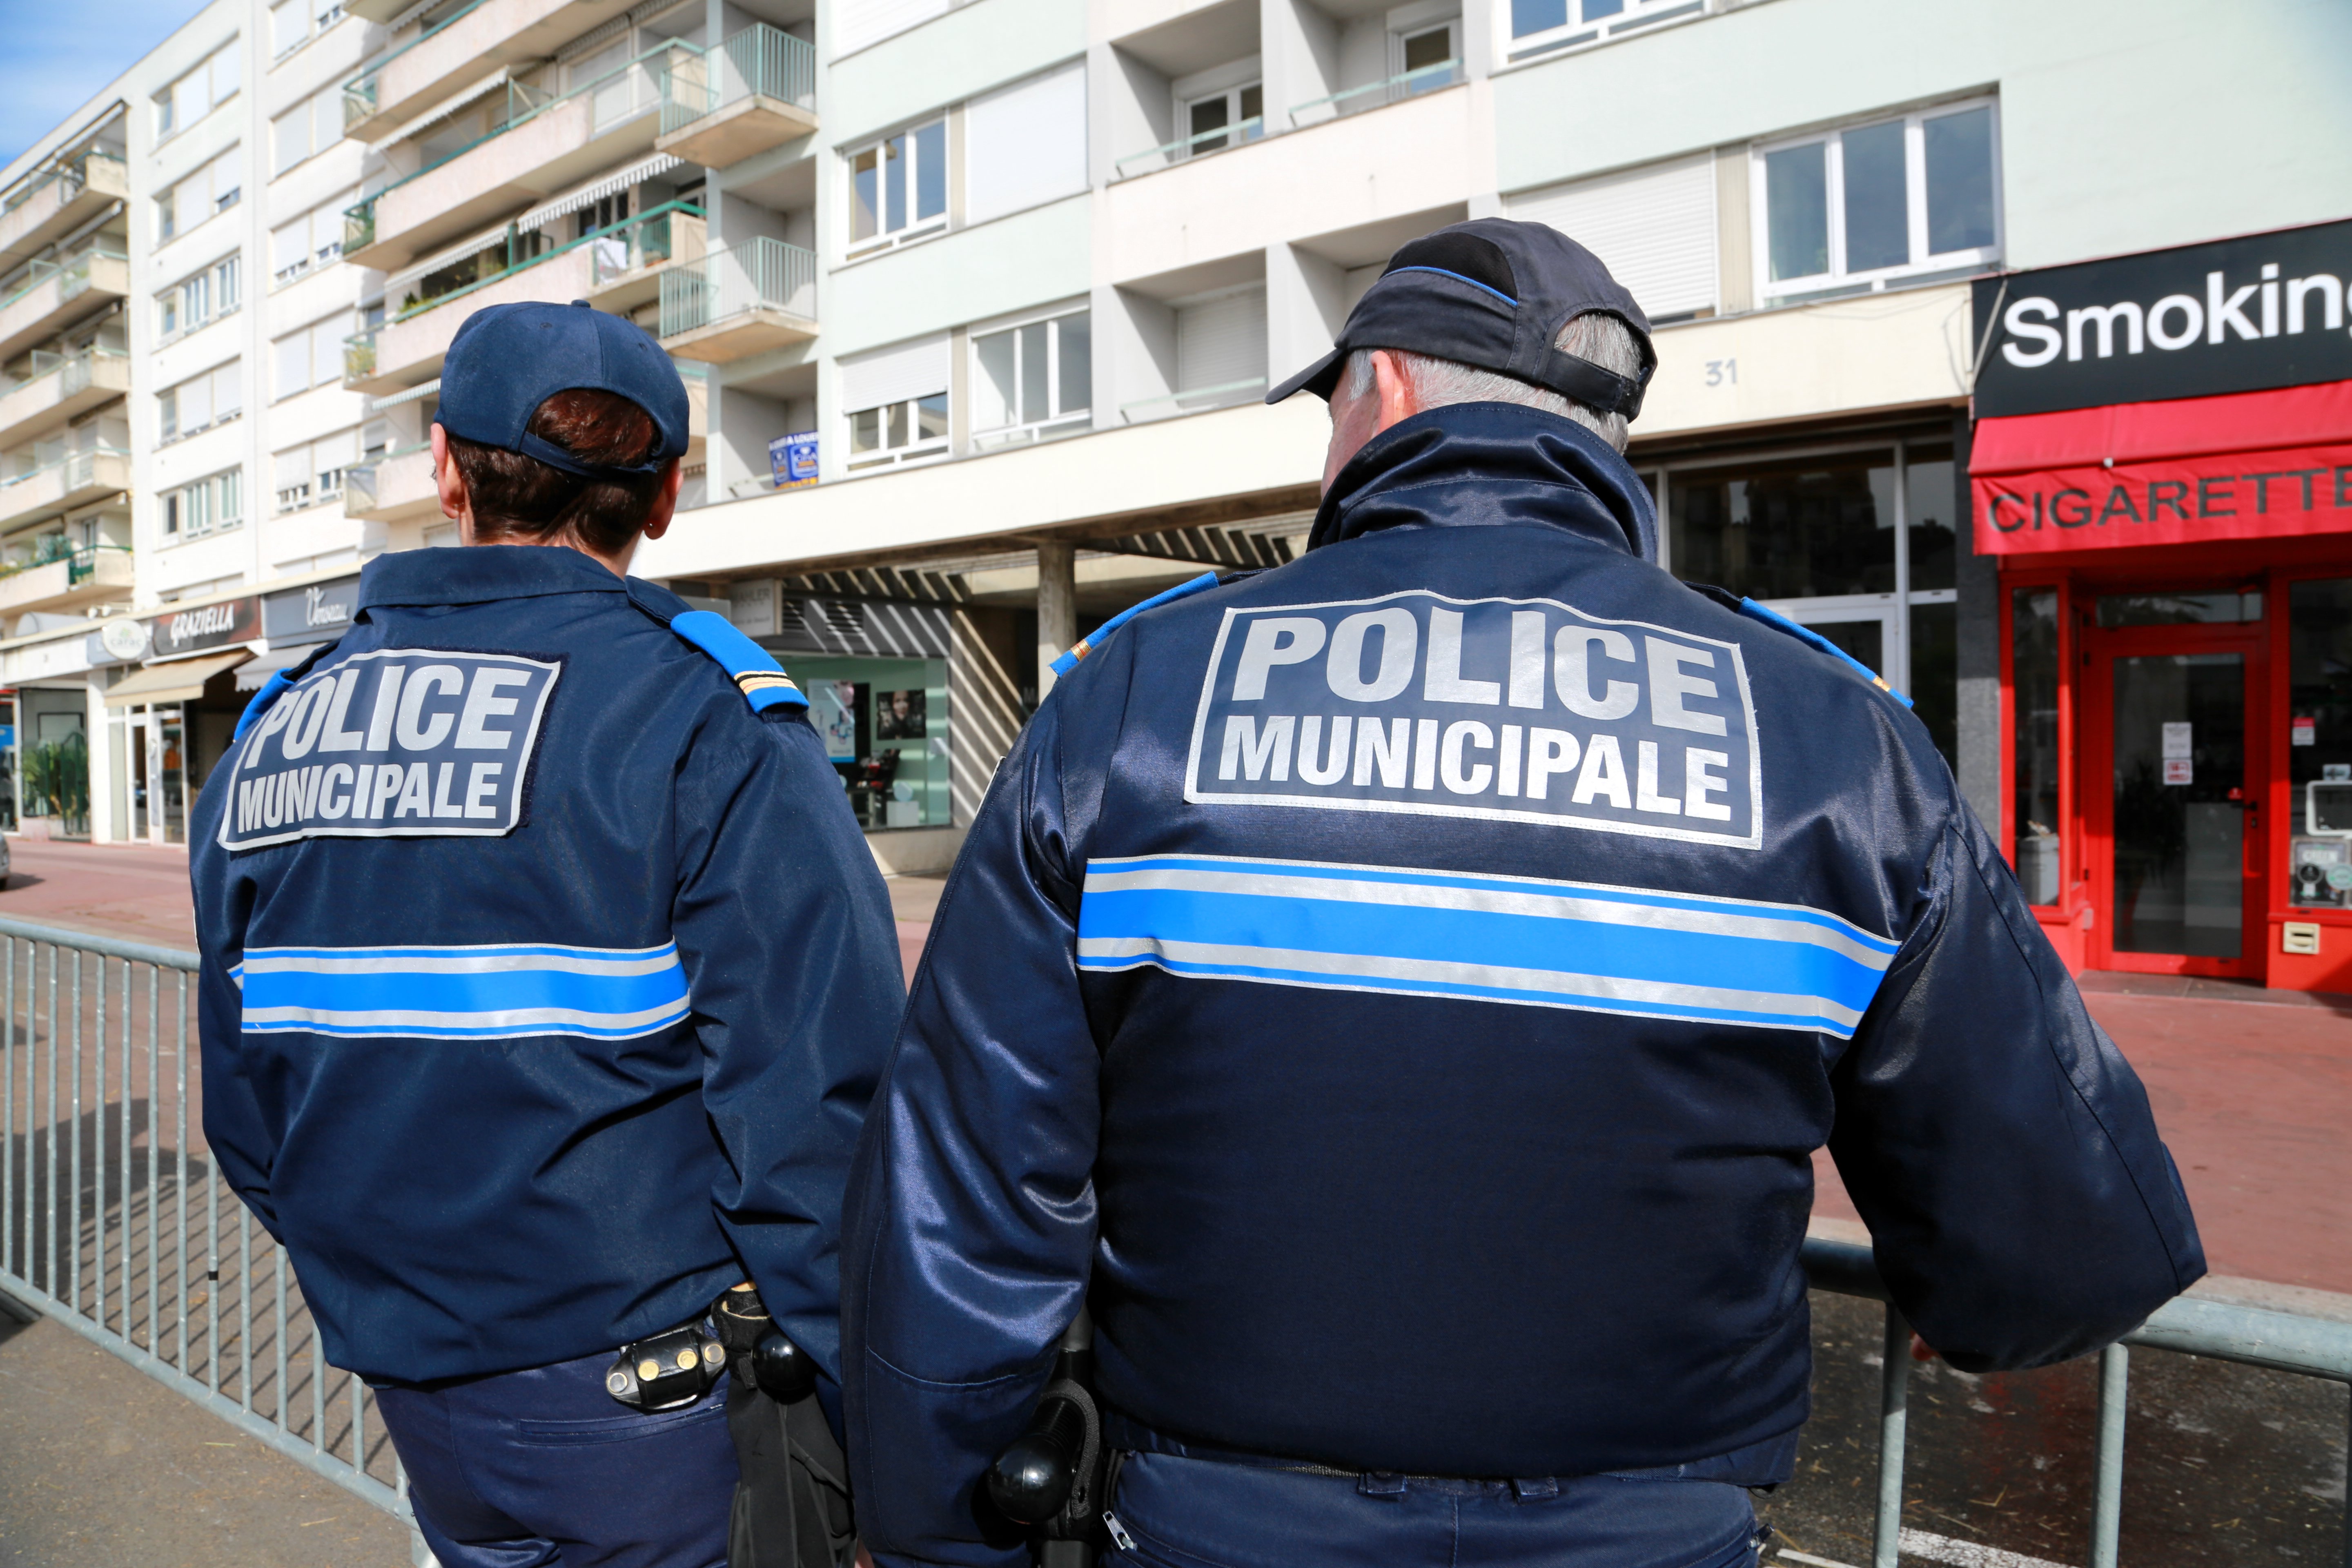 Police municipale  Ville de Marseille